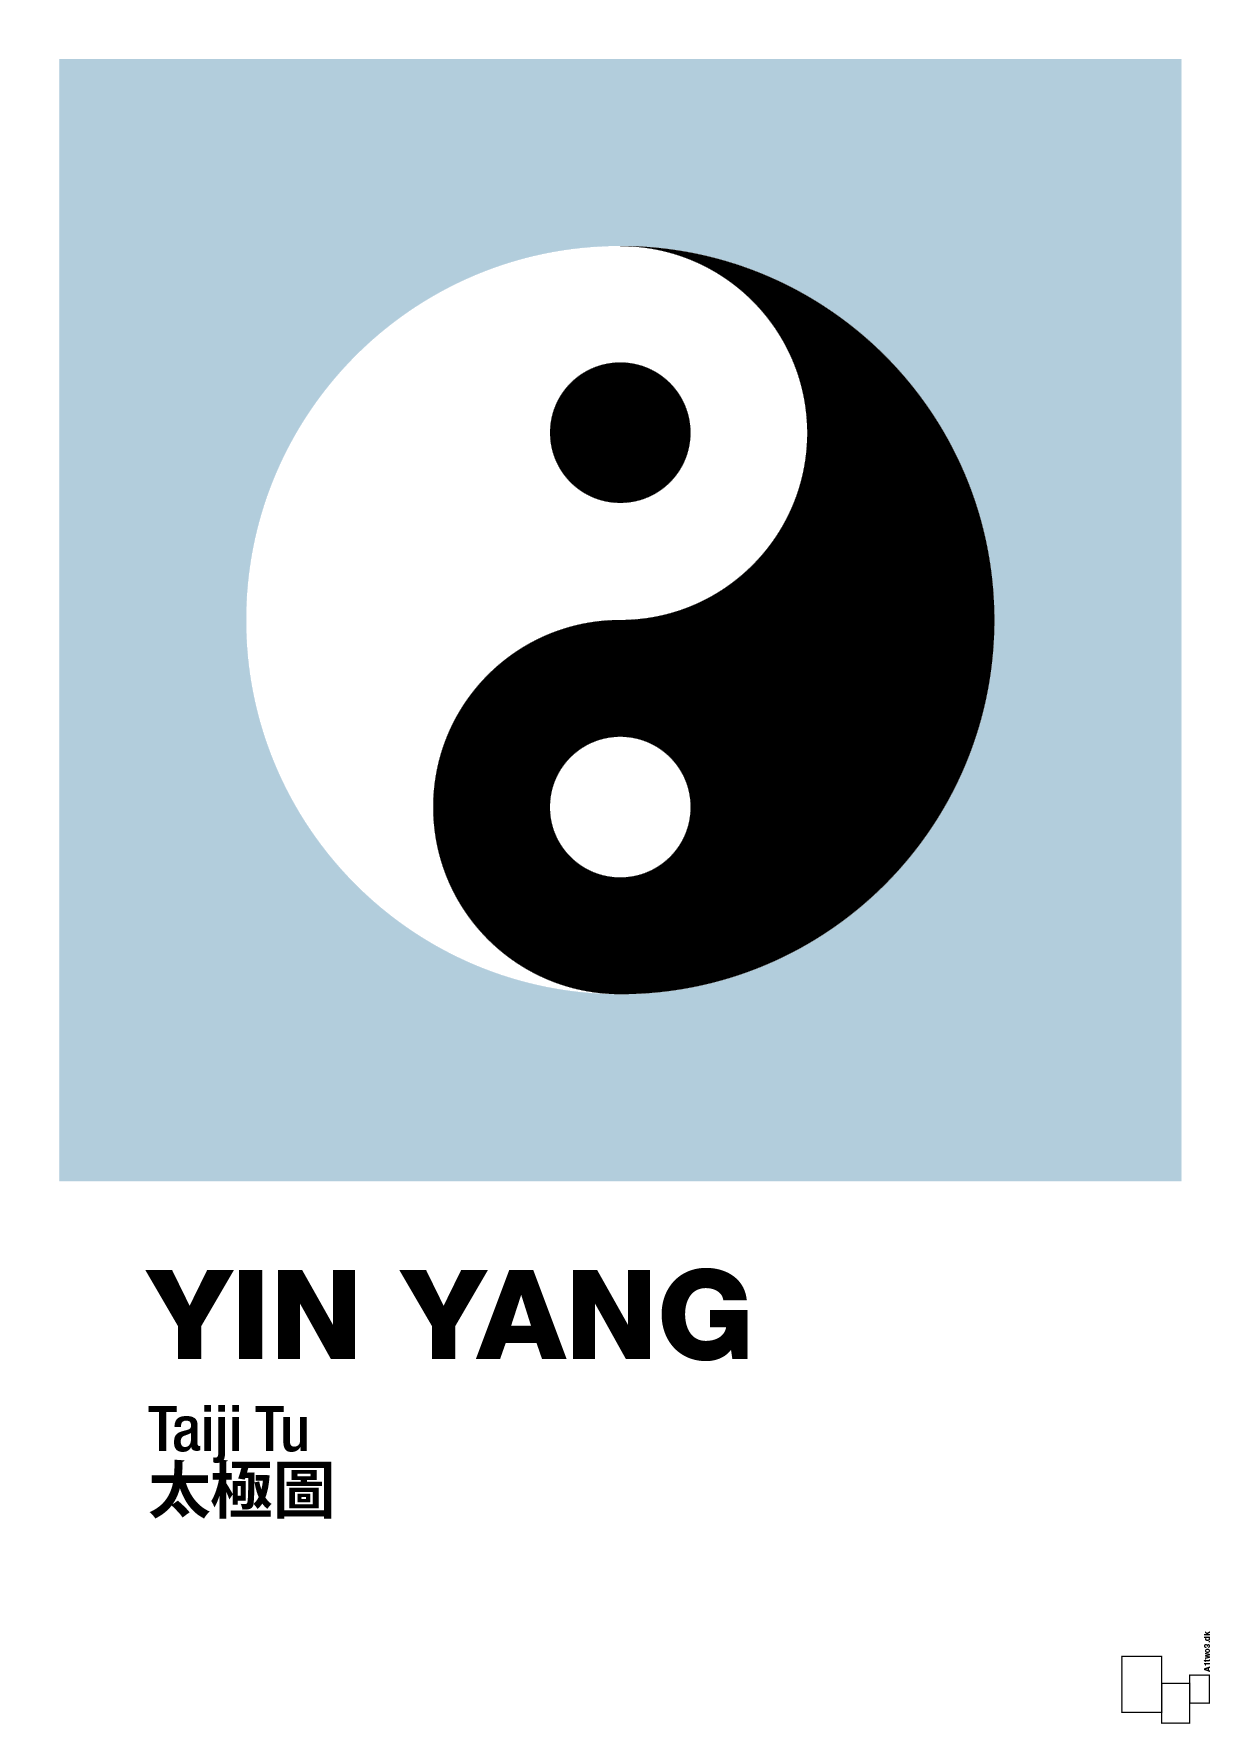 yin yang - Plakat med Videnskab i Heavenly Blue